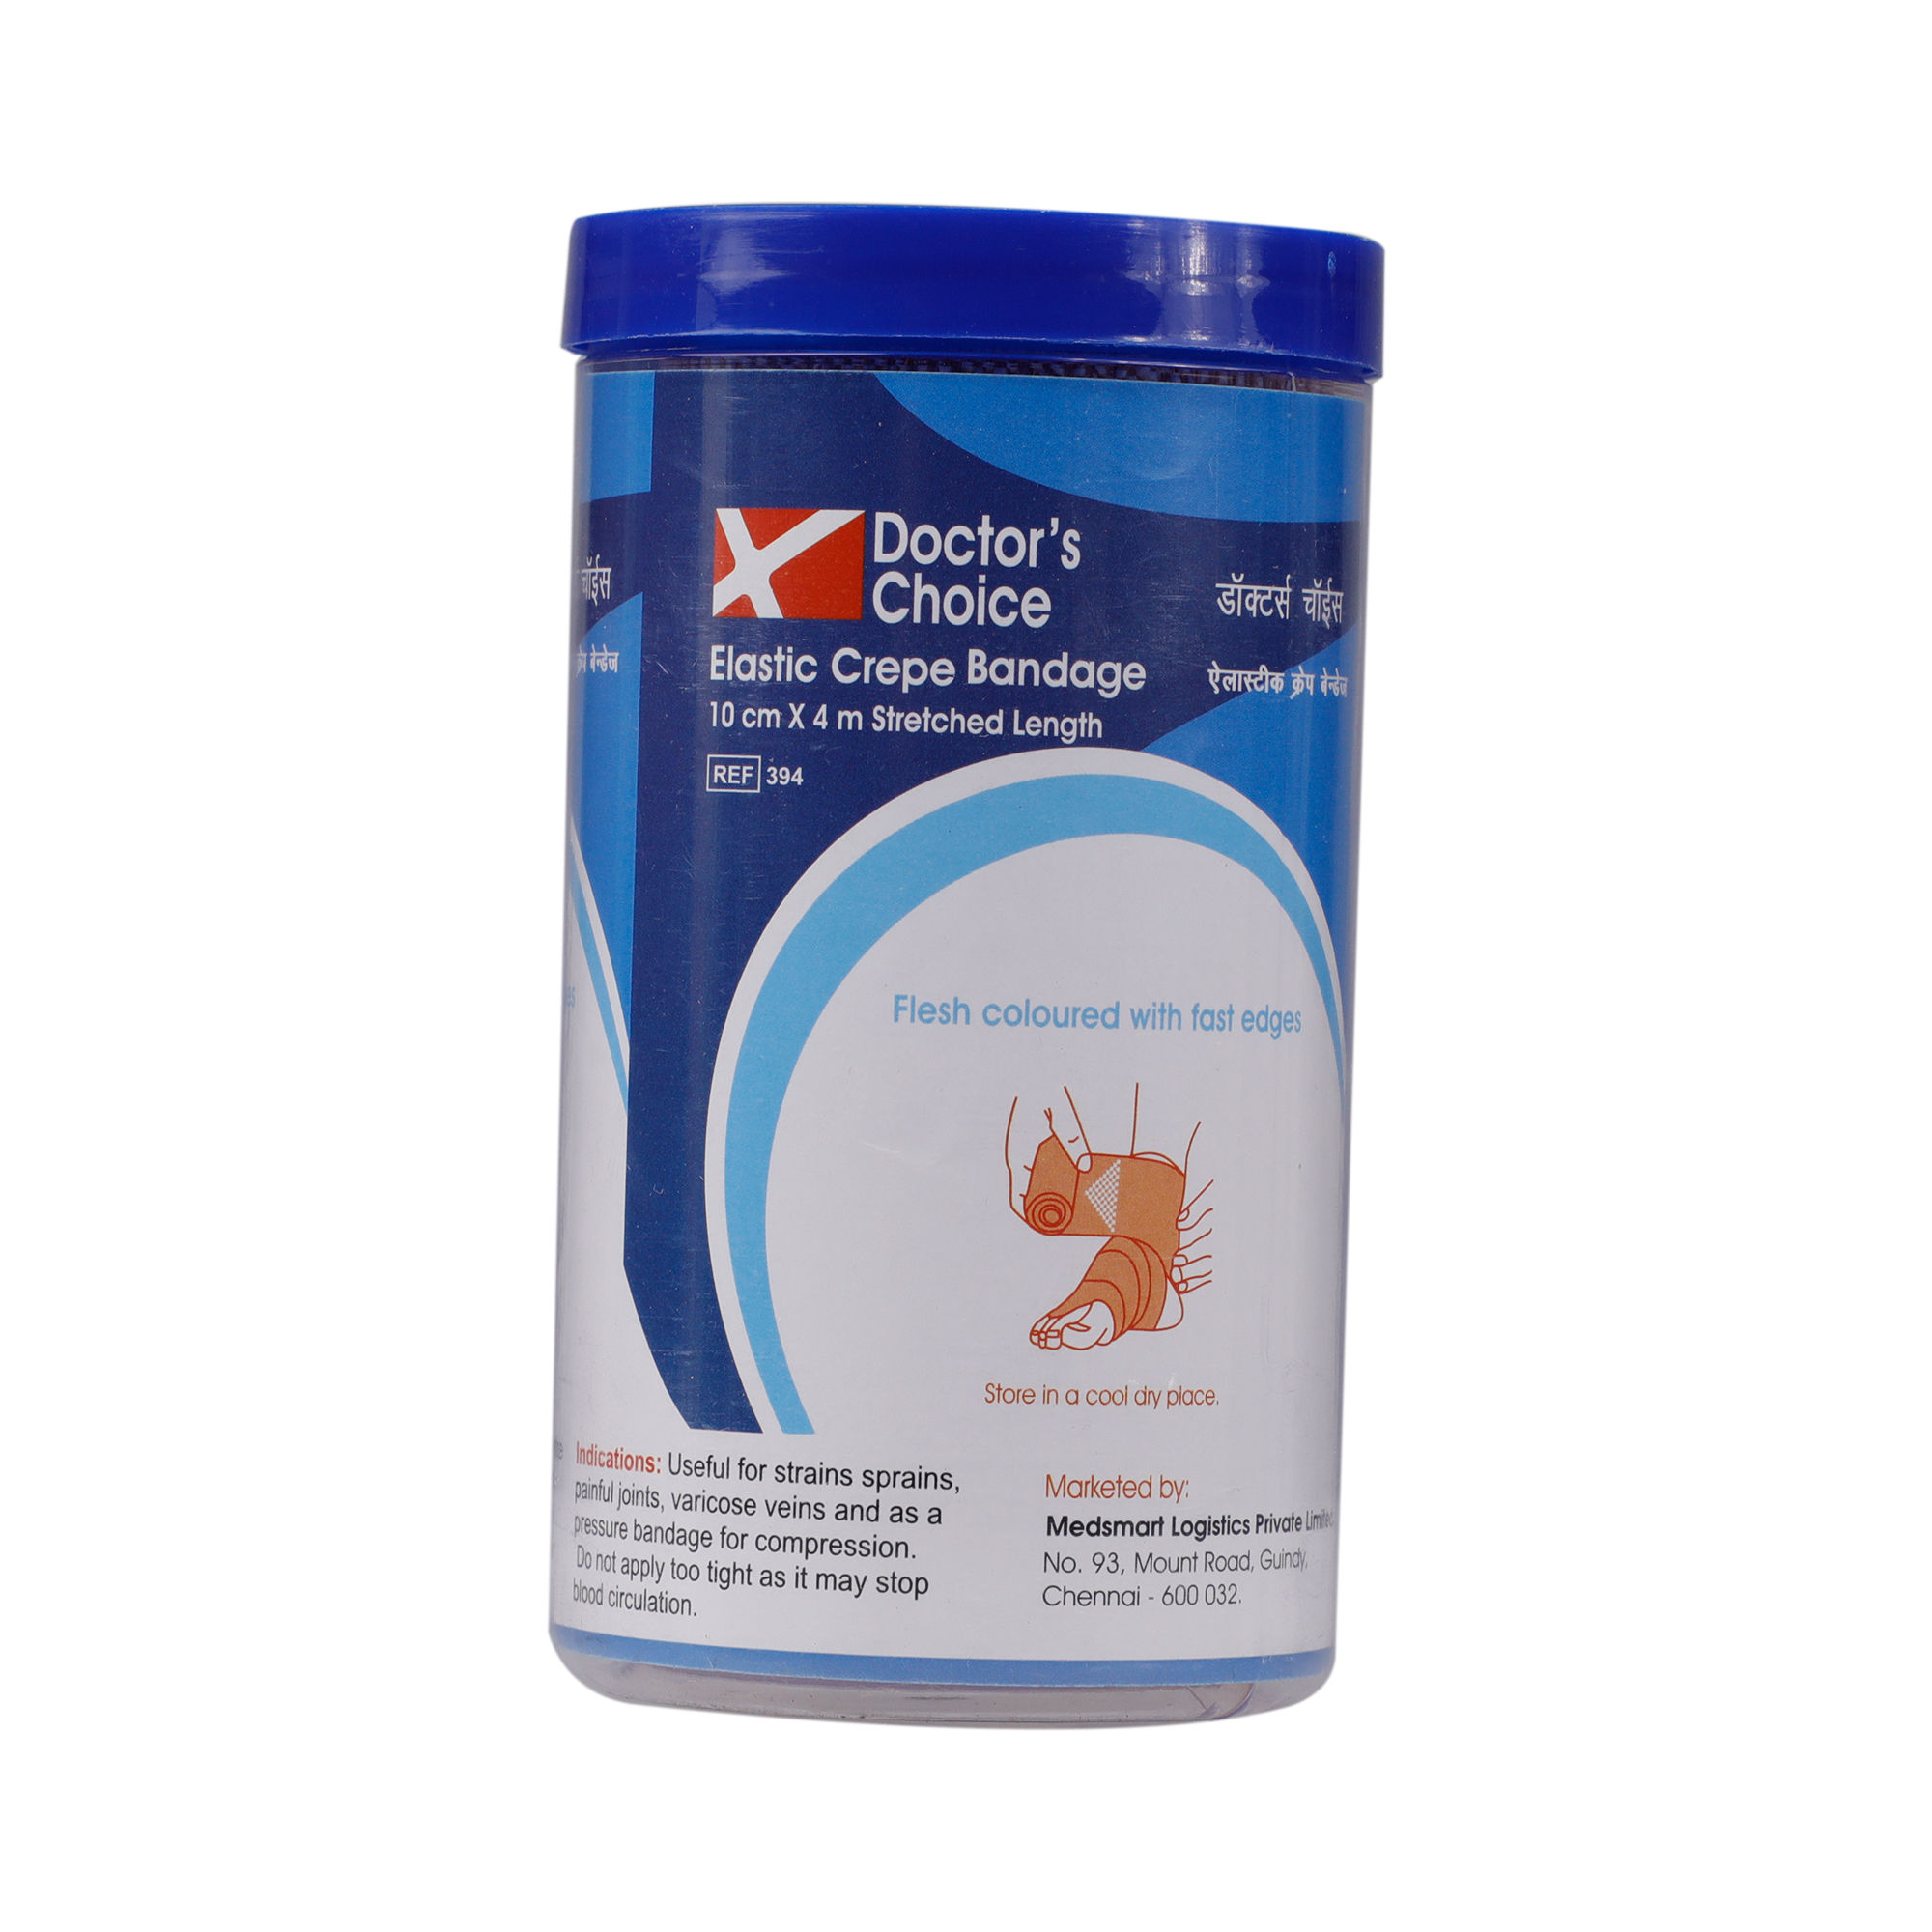 Buy Doctor's Choice Elastic Crepe Bandage, 10 cm Online